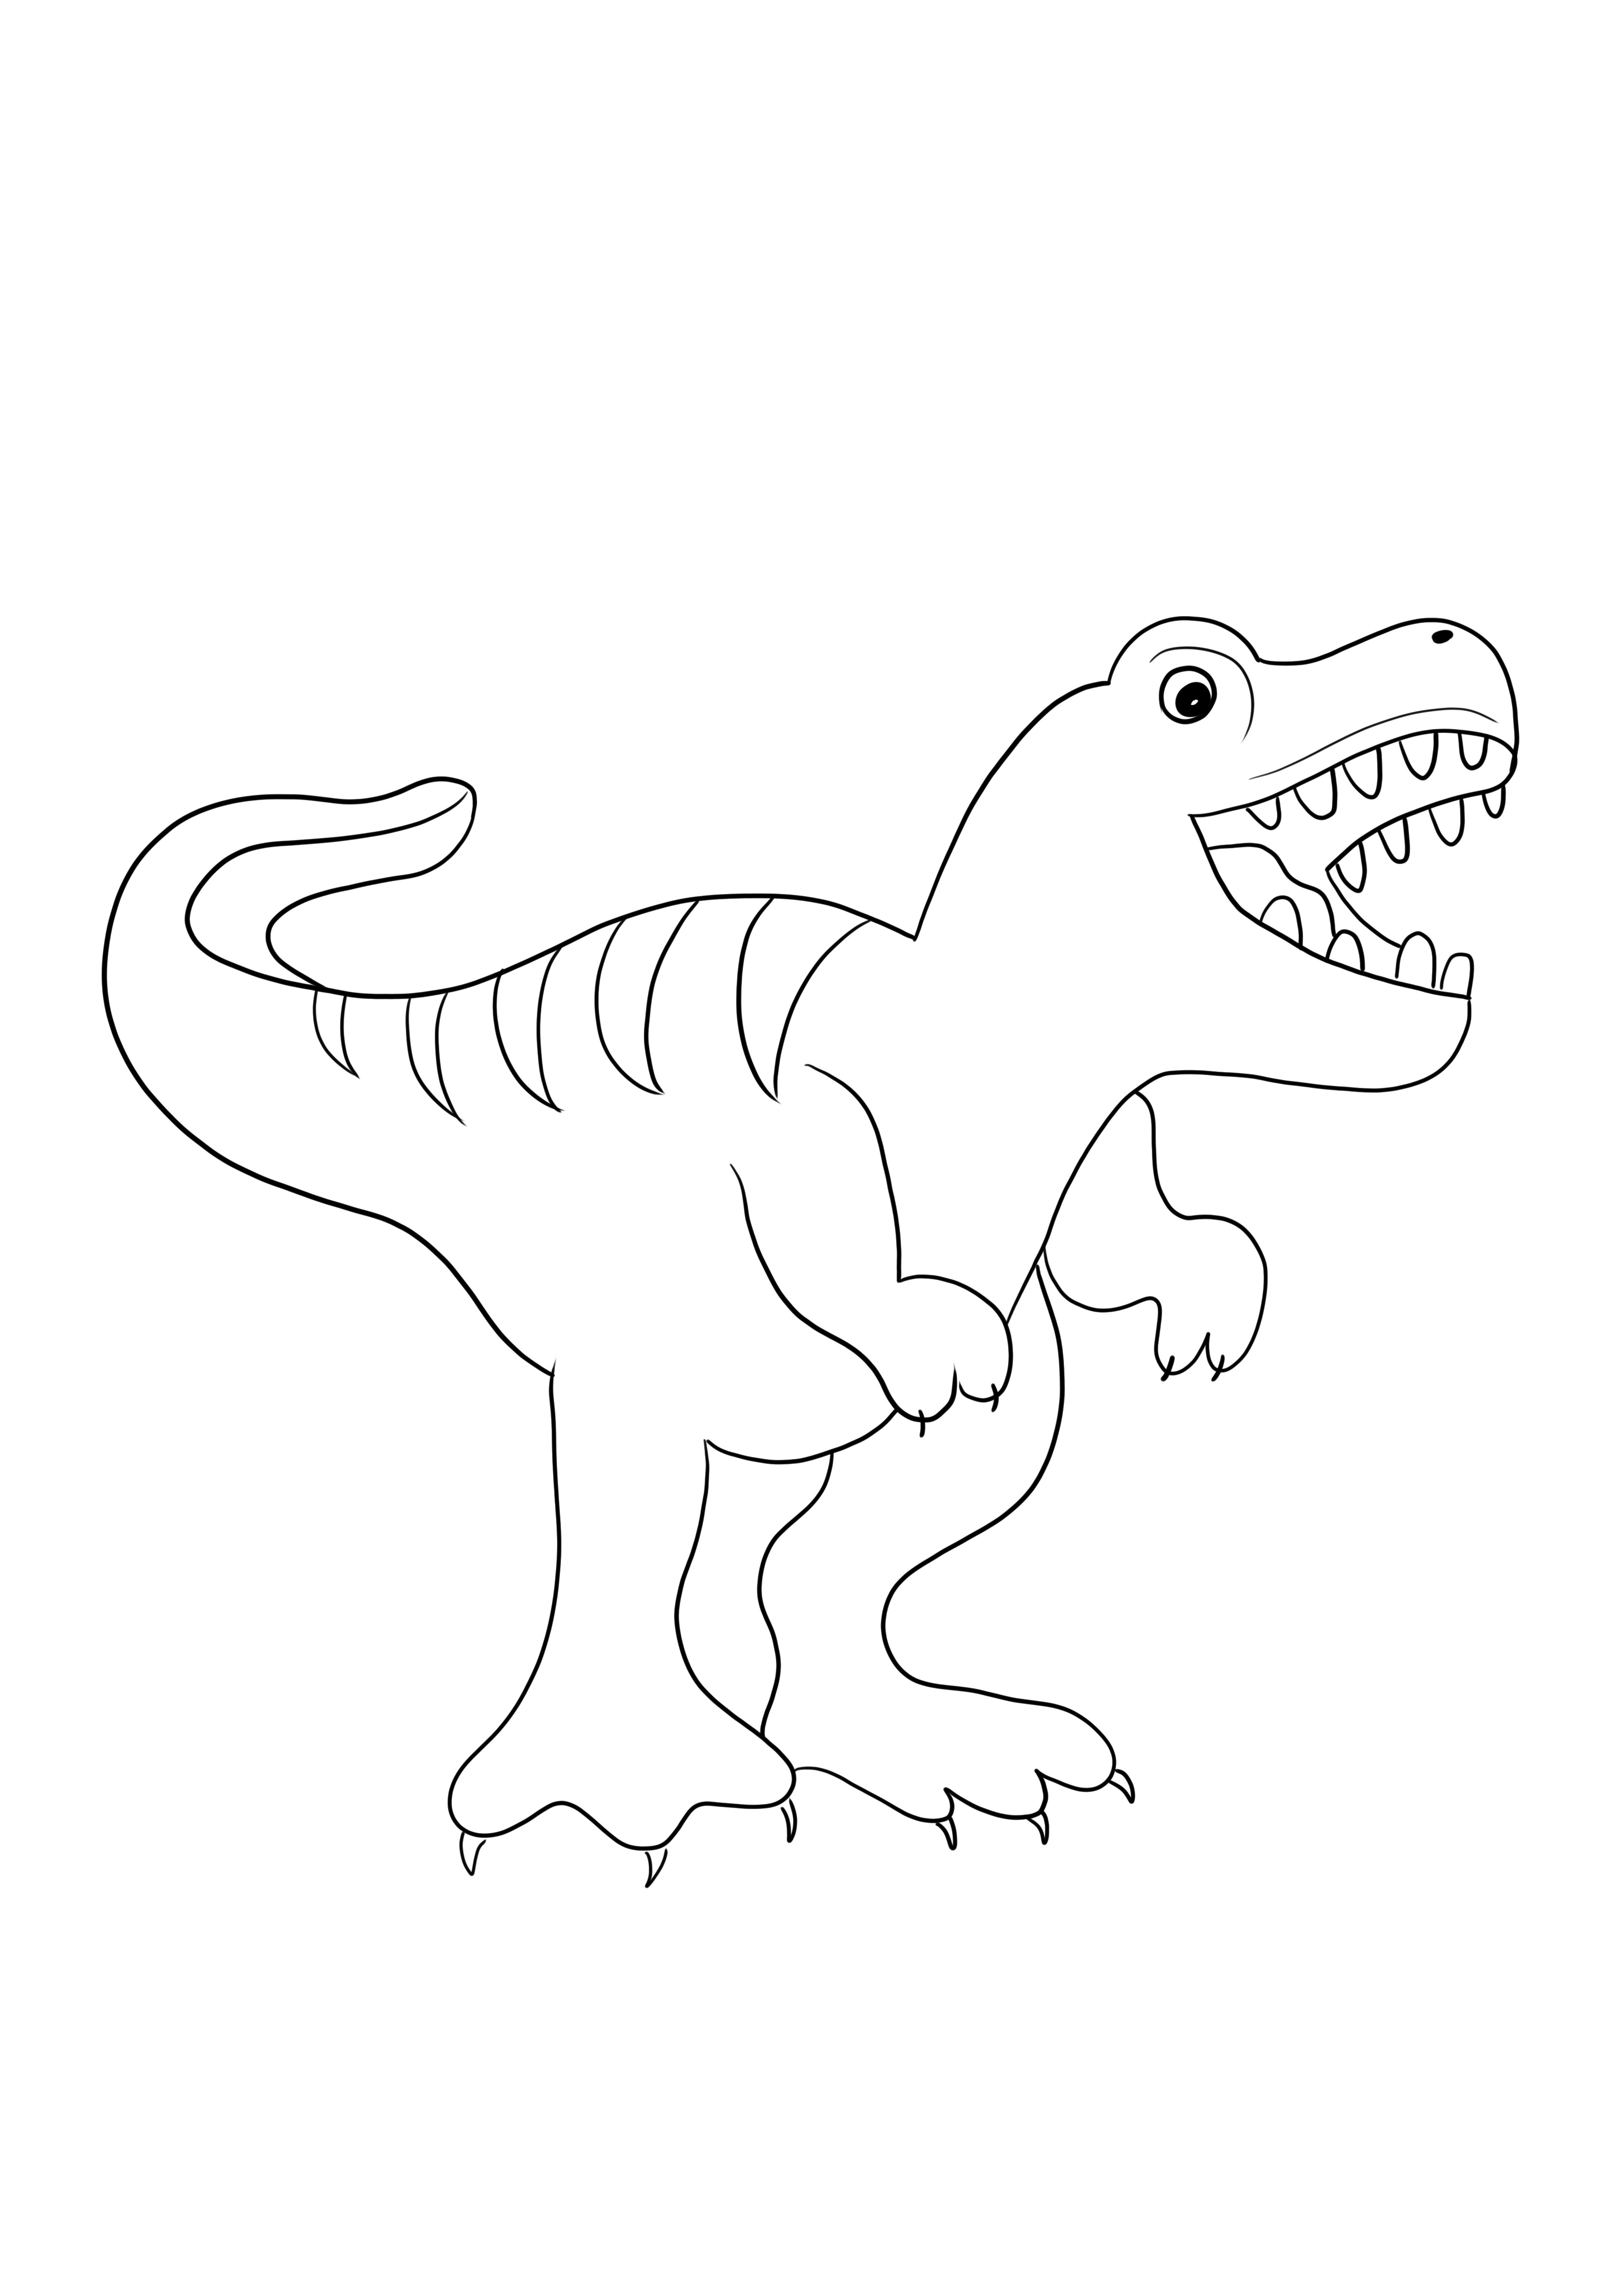 T-rex emoji color and download free image